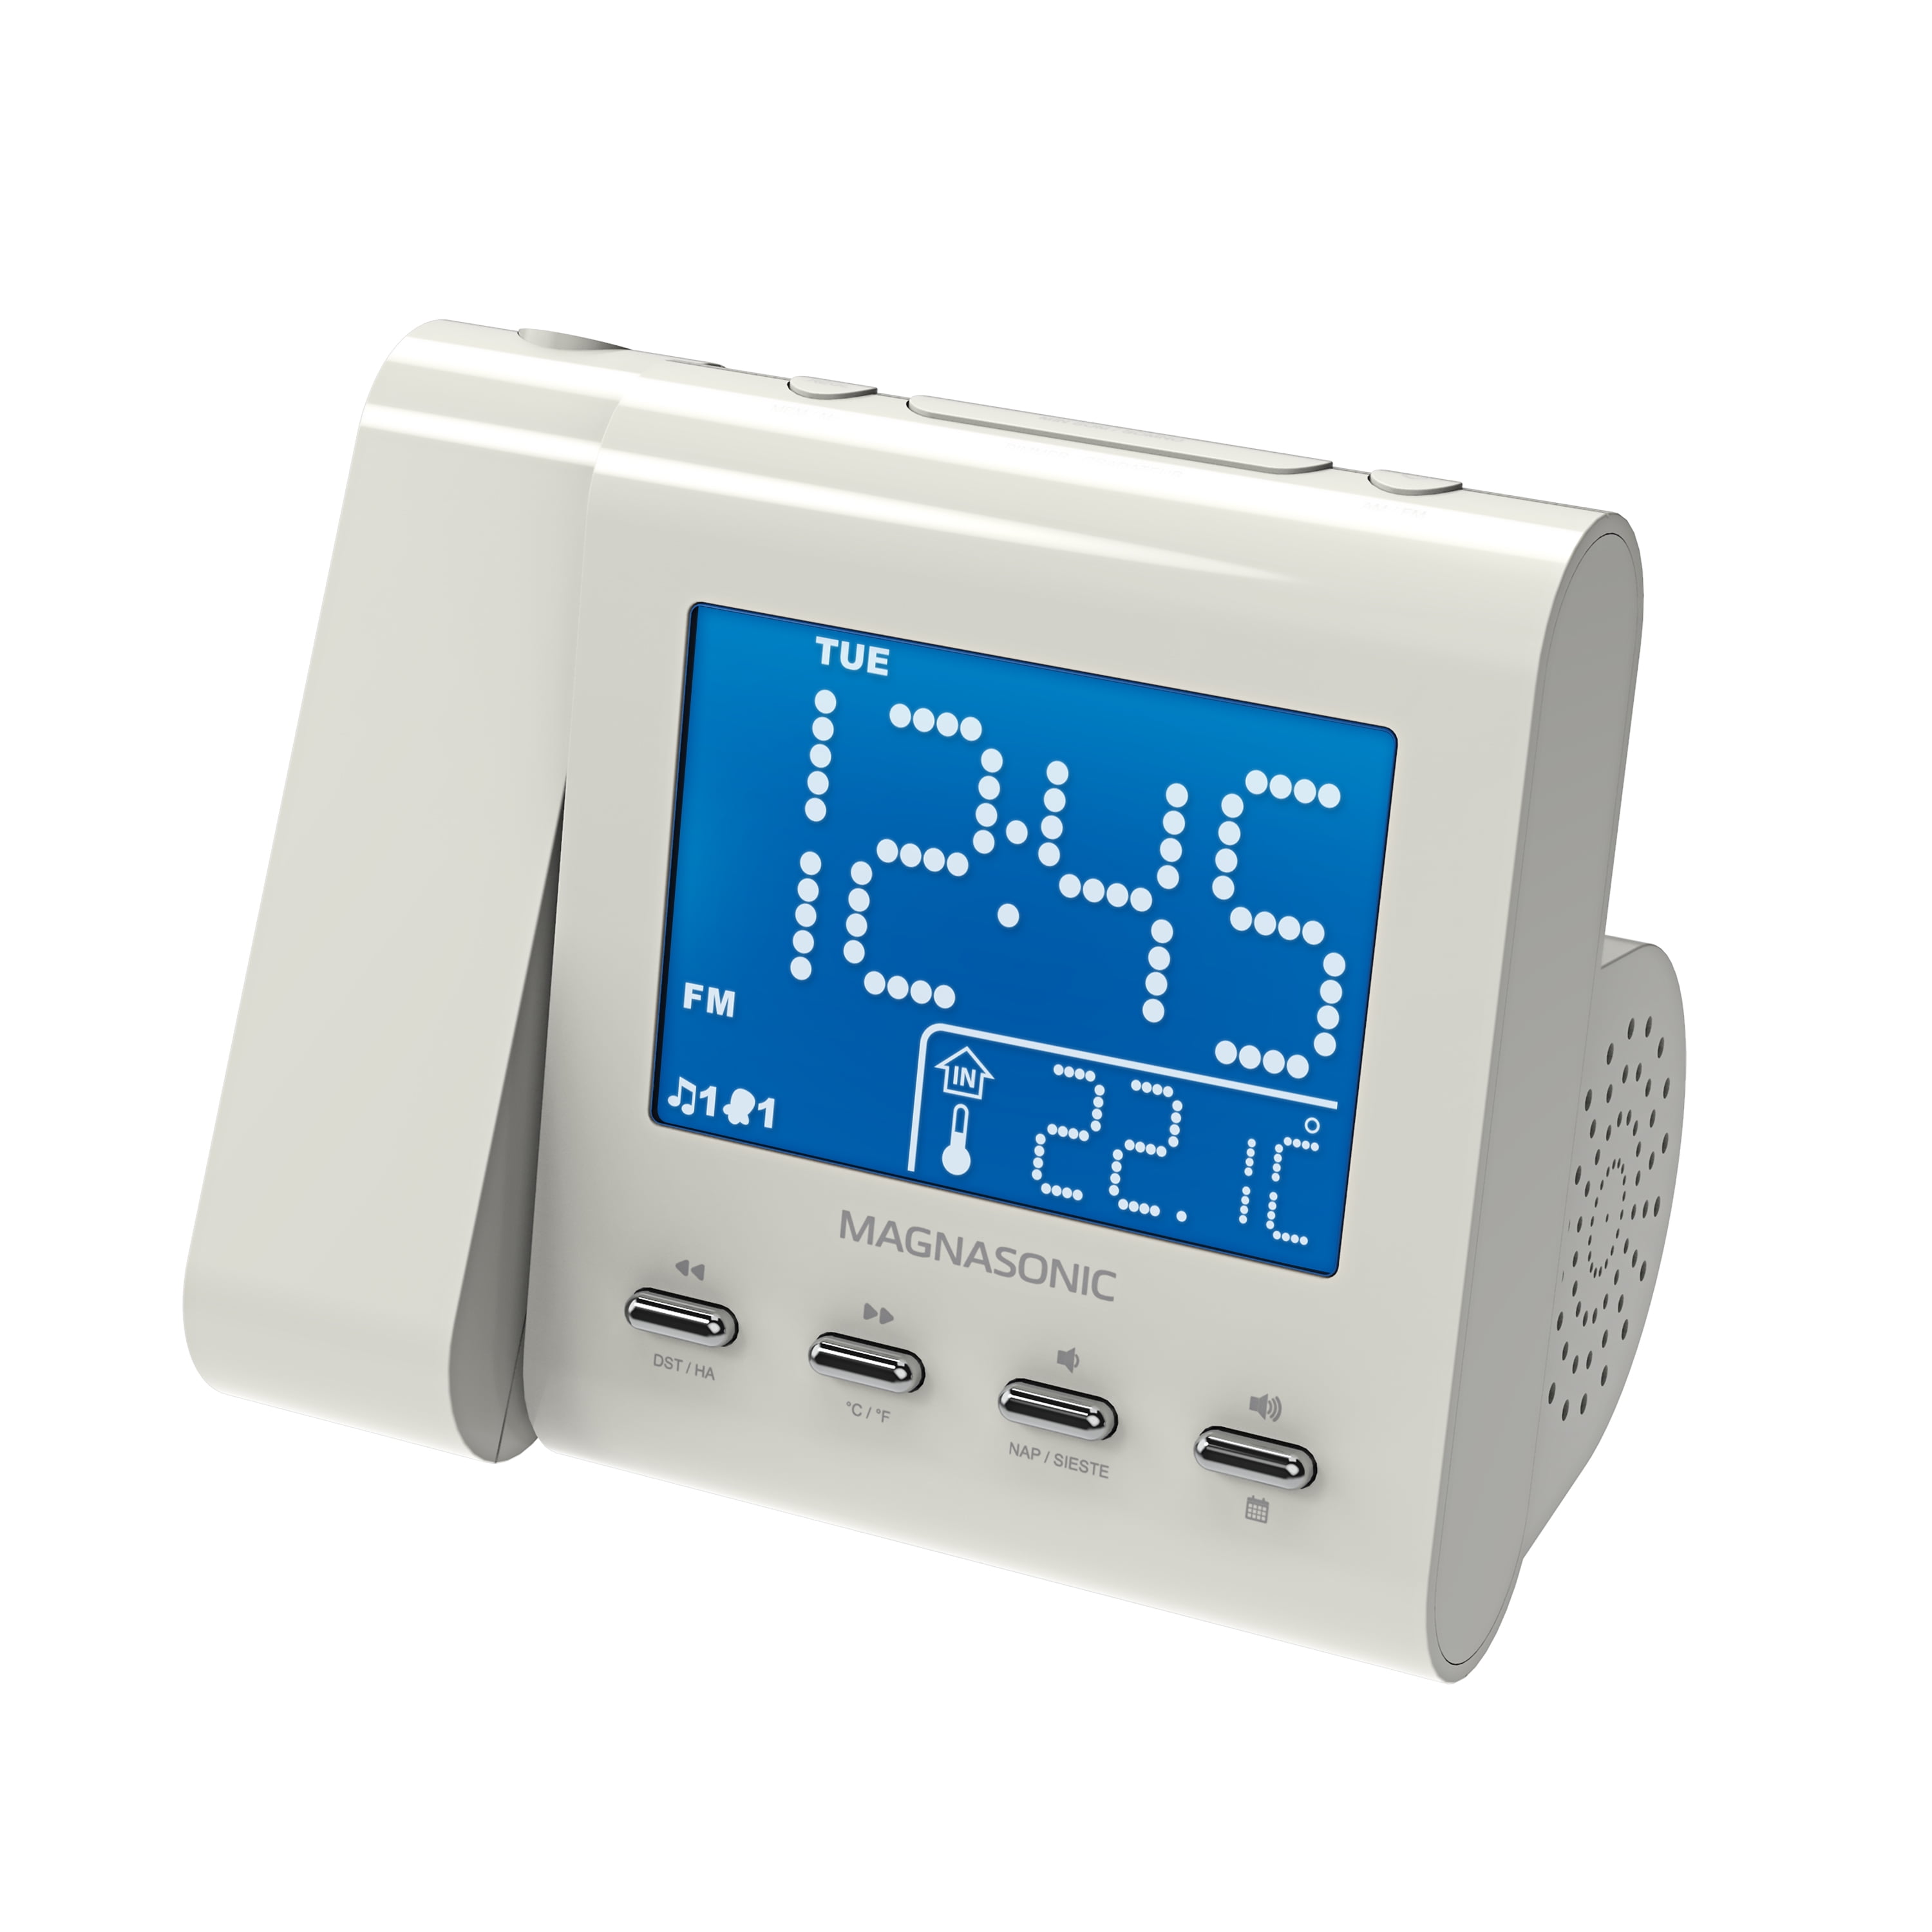 Emerson SmartSet Projection Alarm Clock Radio with USB 1.4" Blue LED Display 